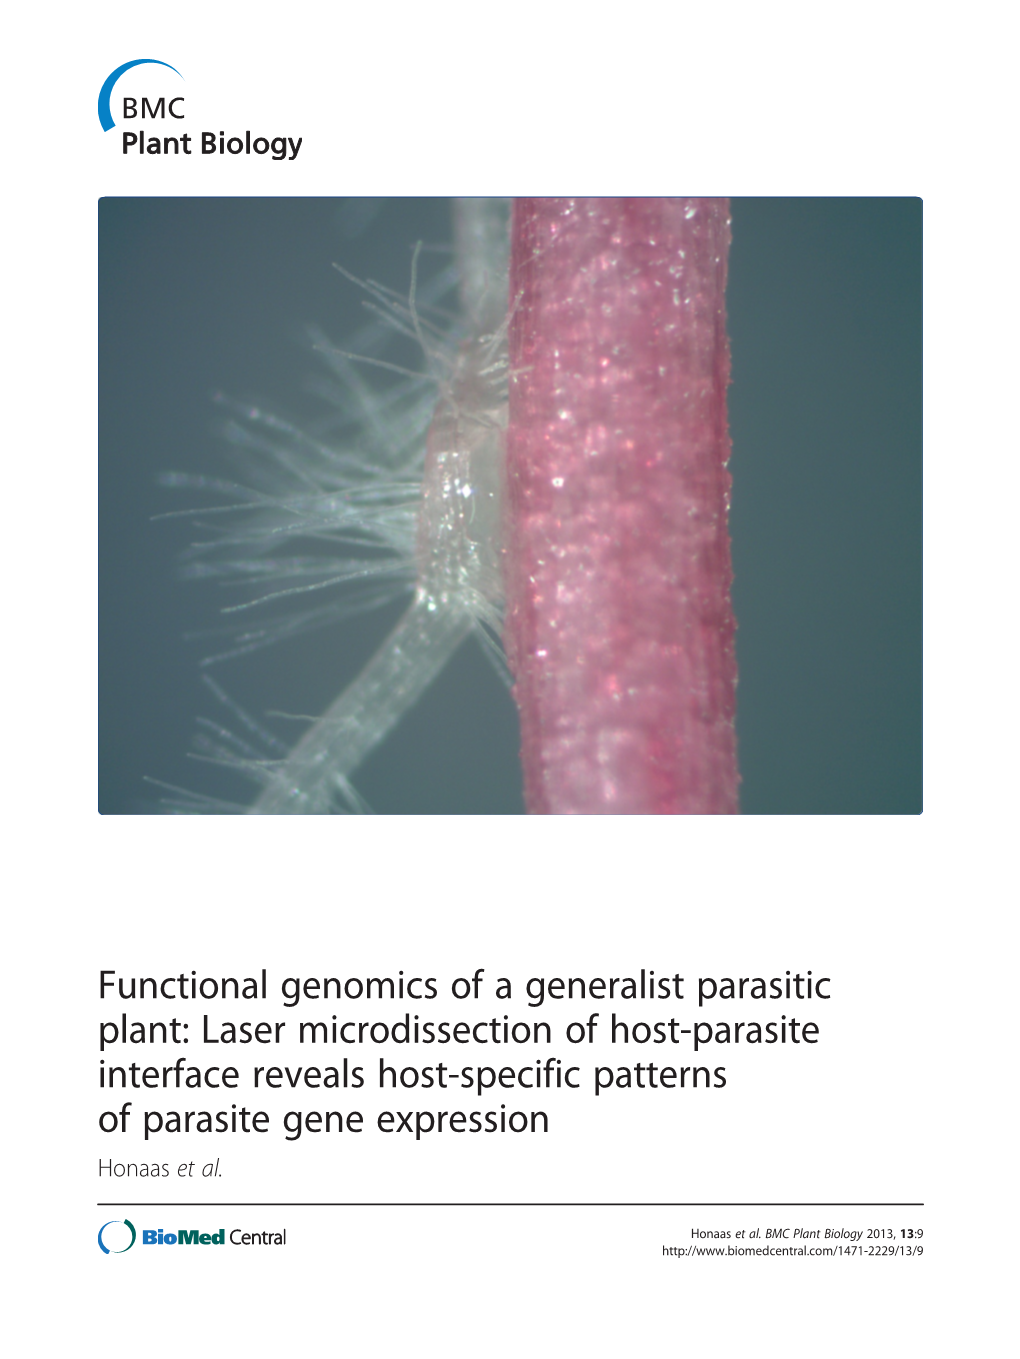 Functional Genomics of a Generalist Parasitic Plant